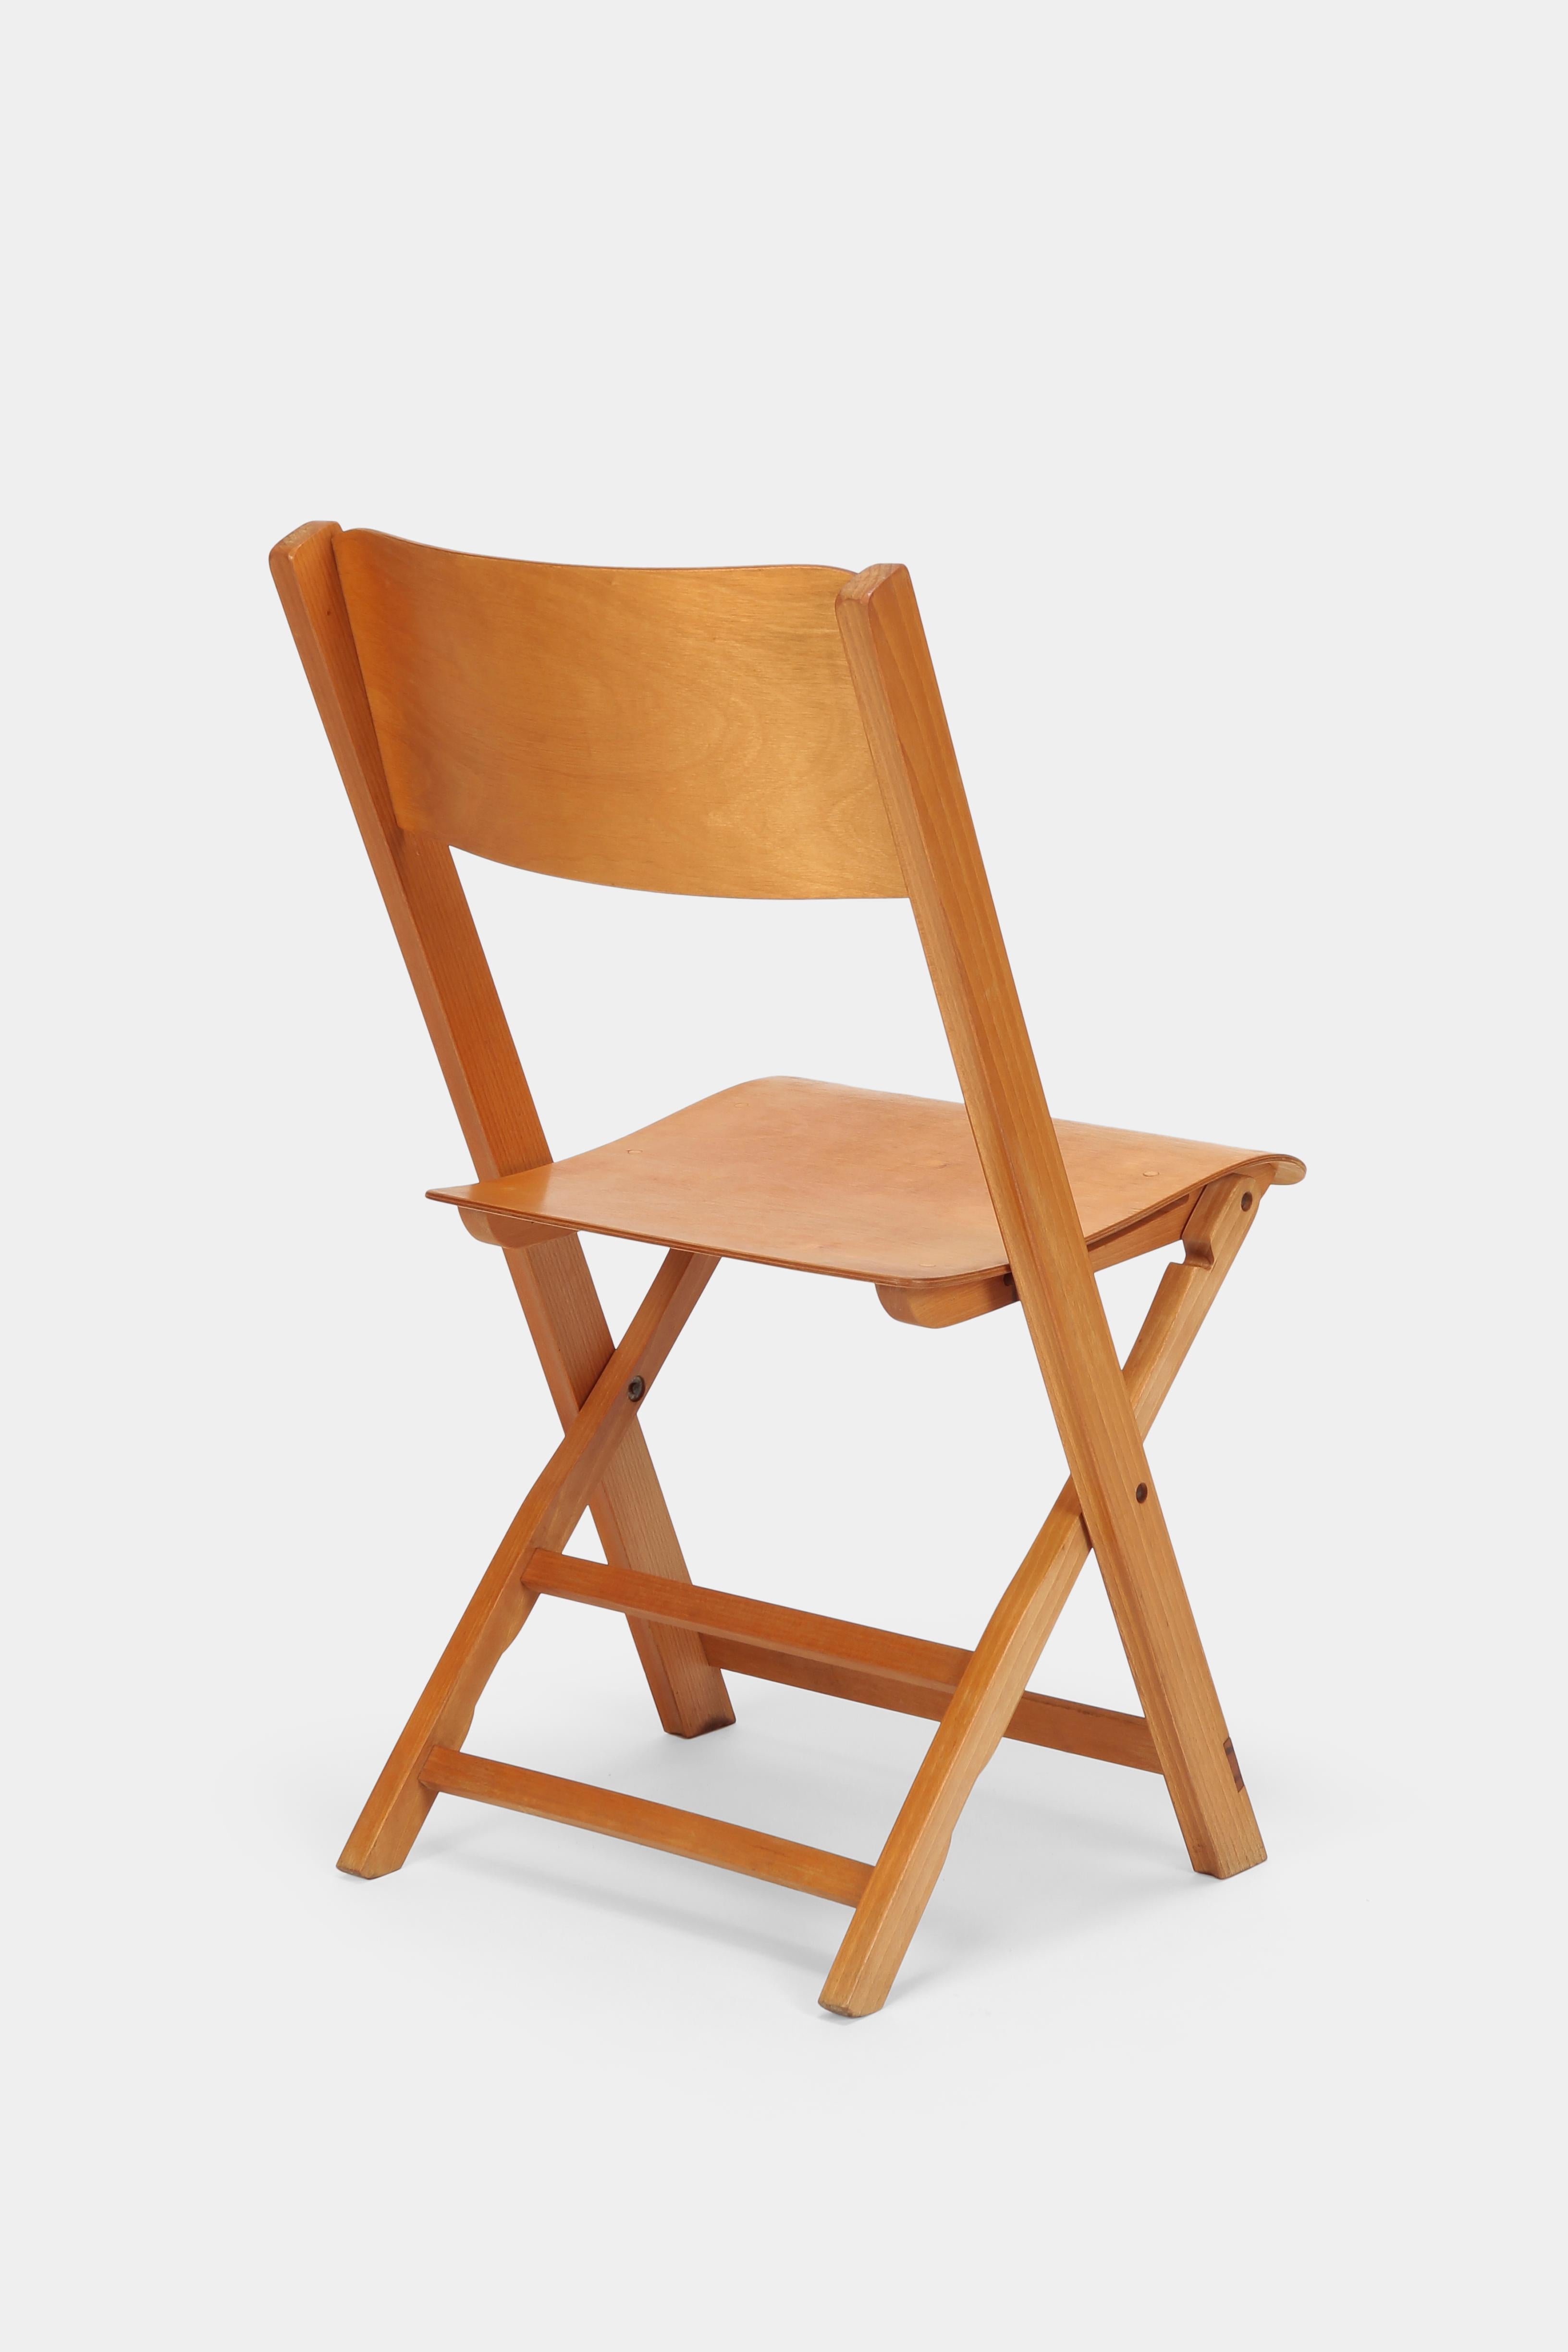 Mid-20th Century Swiss Midcentury Modern Birchwood Folding Chair, Wohnbedarf 1940s, Light Brown For Sale